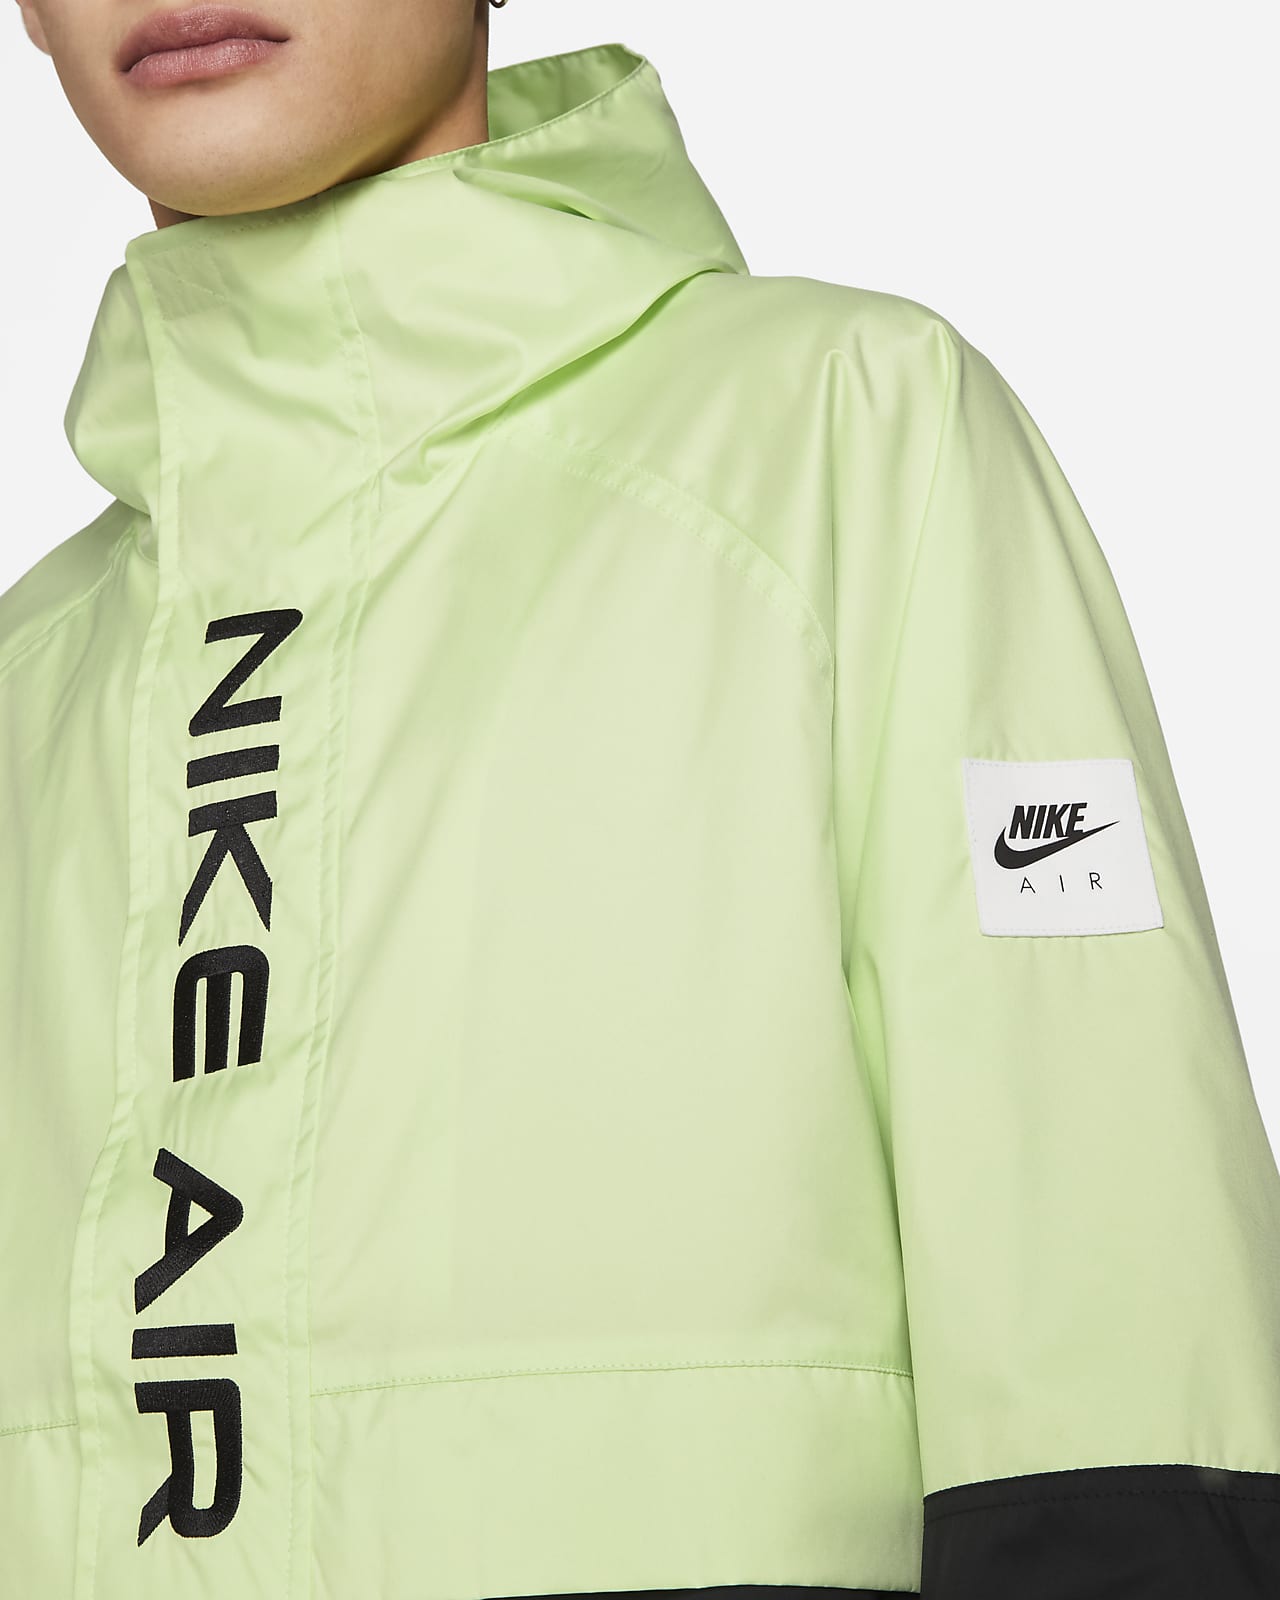 nike air jacket green